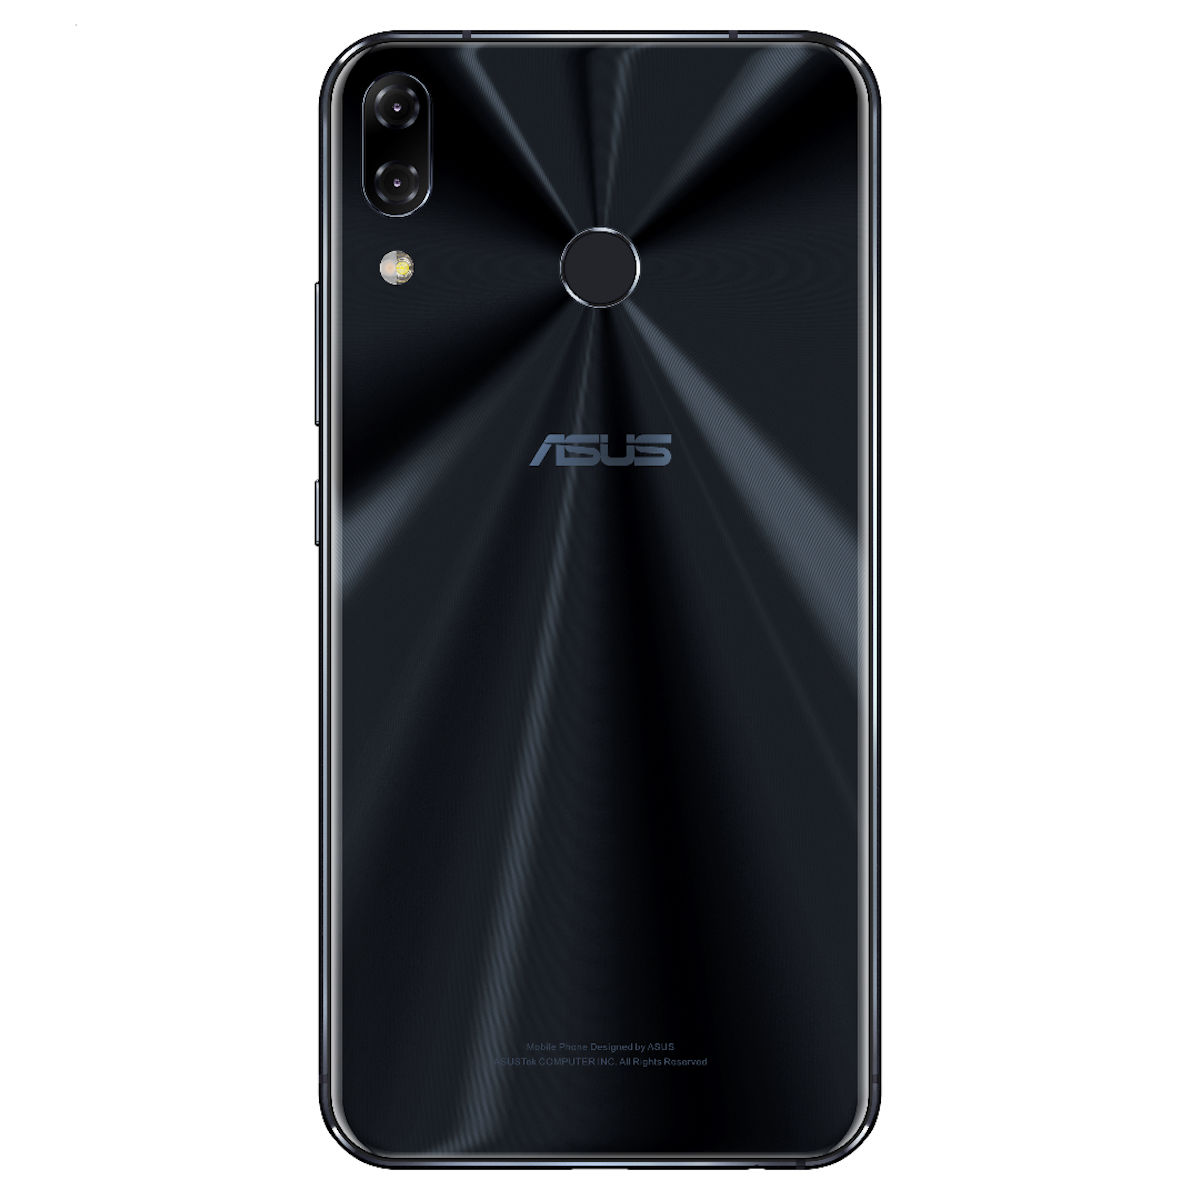 AsusからのiPhone Xへの回答？「ZenFone 5」はiPhone Xのようなデザインで低価格！ technology180228_asus-zenfone_2-1200x1200